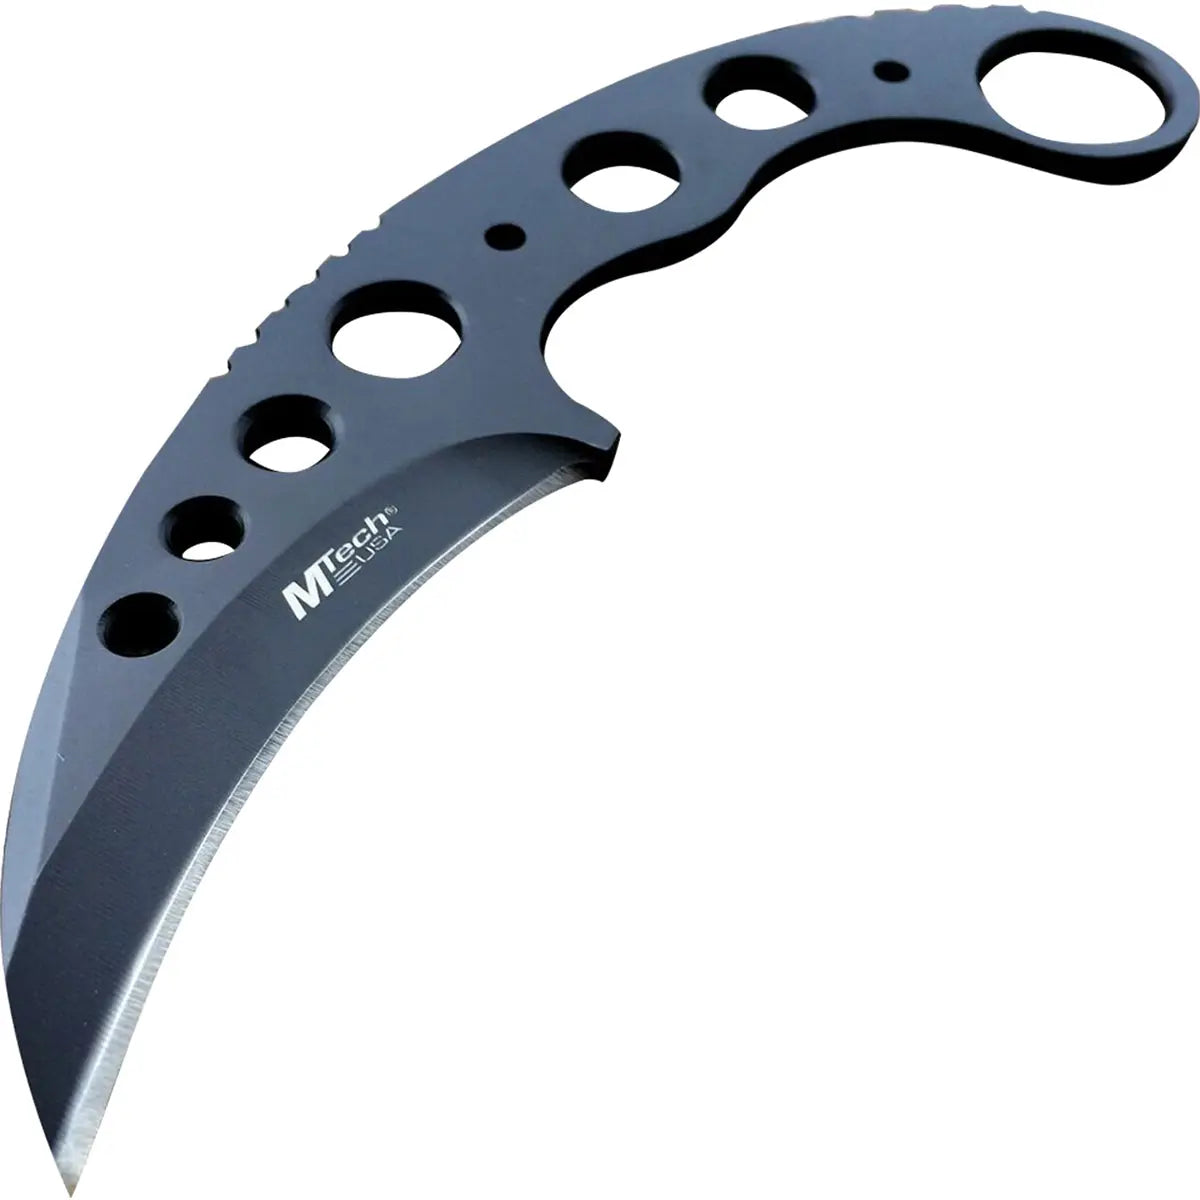 MTech USA Tactical Karambit Full Tang Fixed Blade Neck Knife, Black, MT-664BK M-Tech